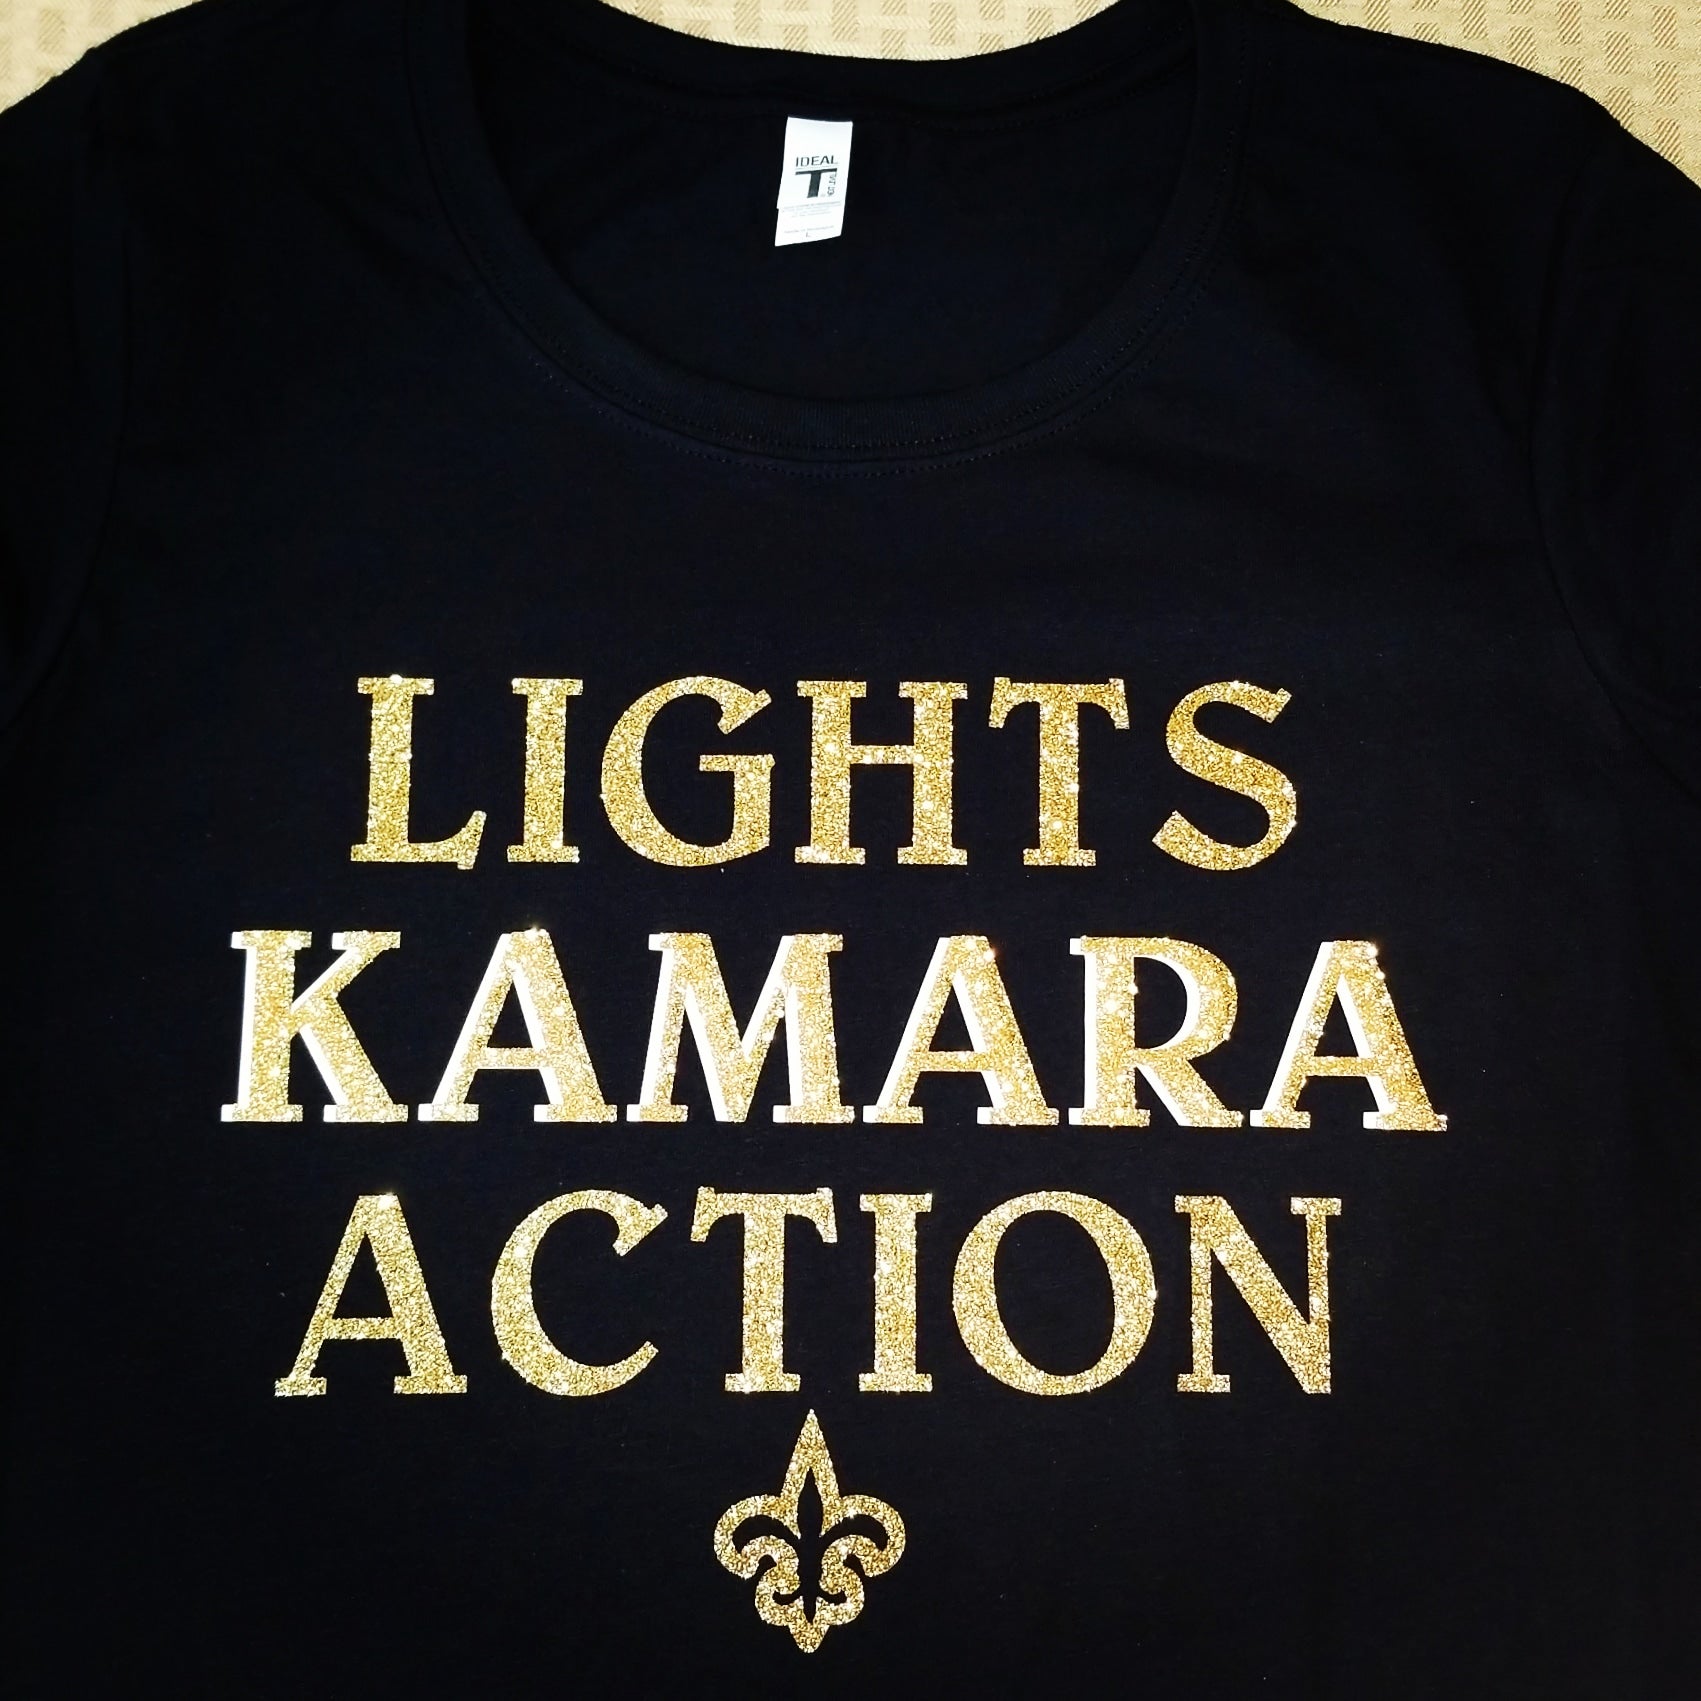 "Lights Kamara Action" tshirt